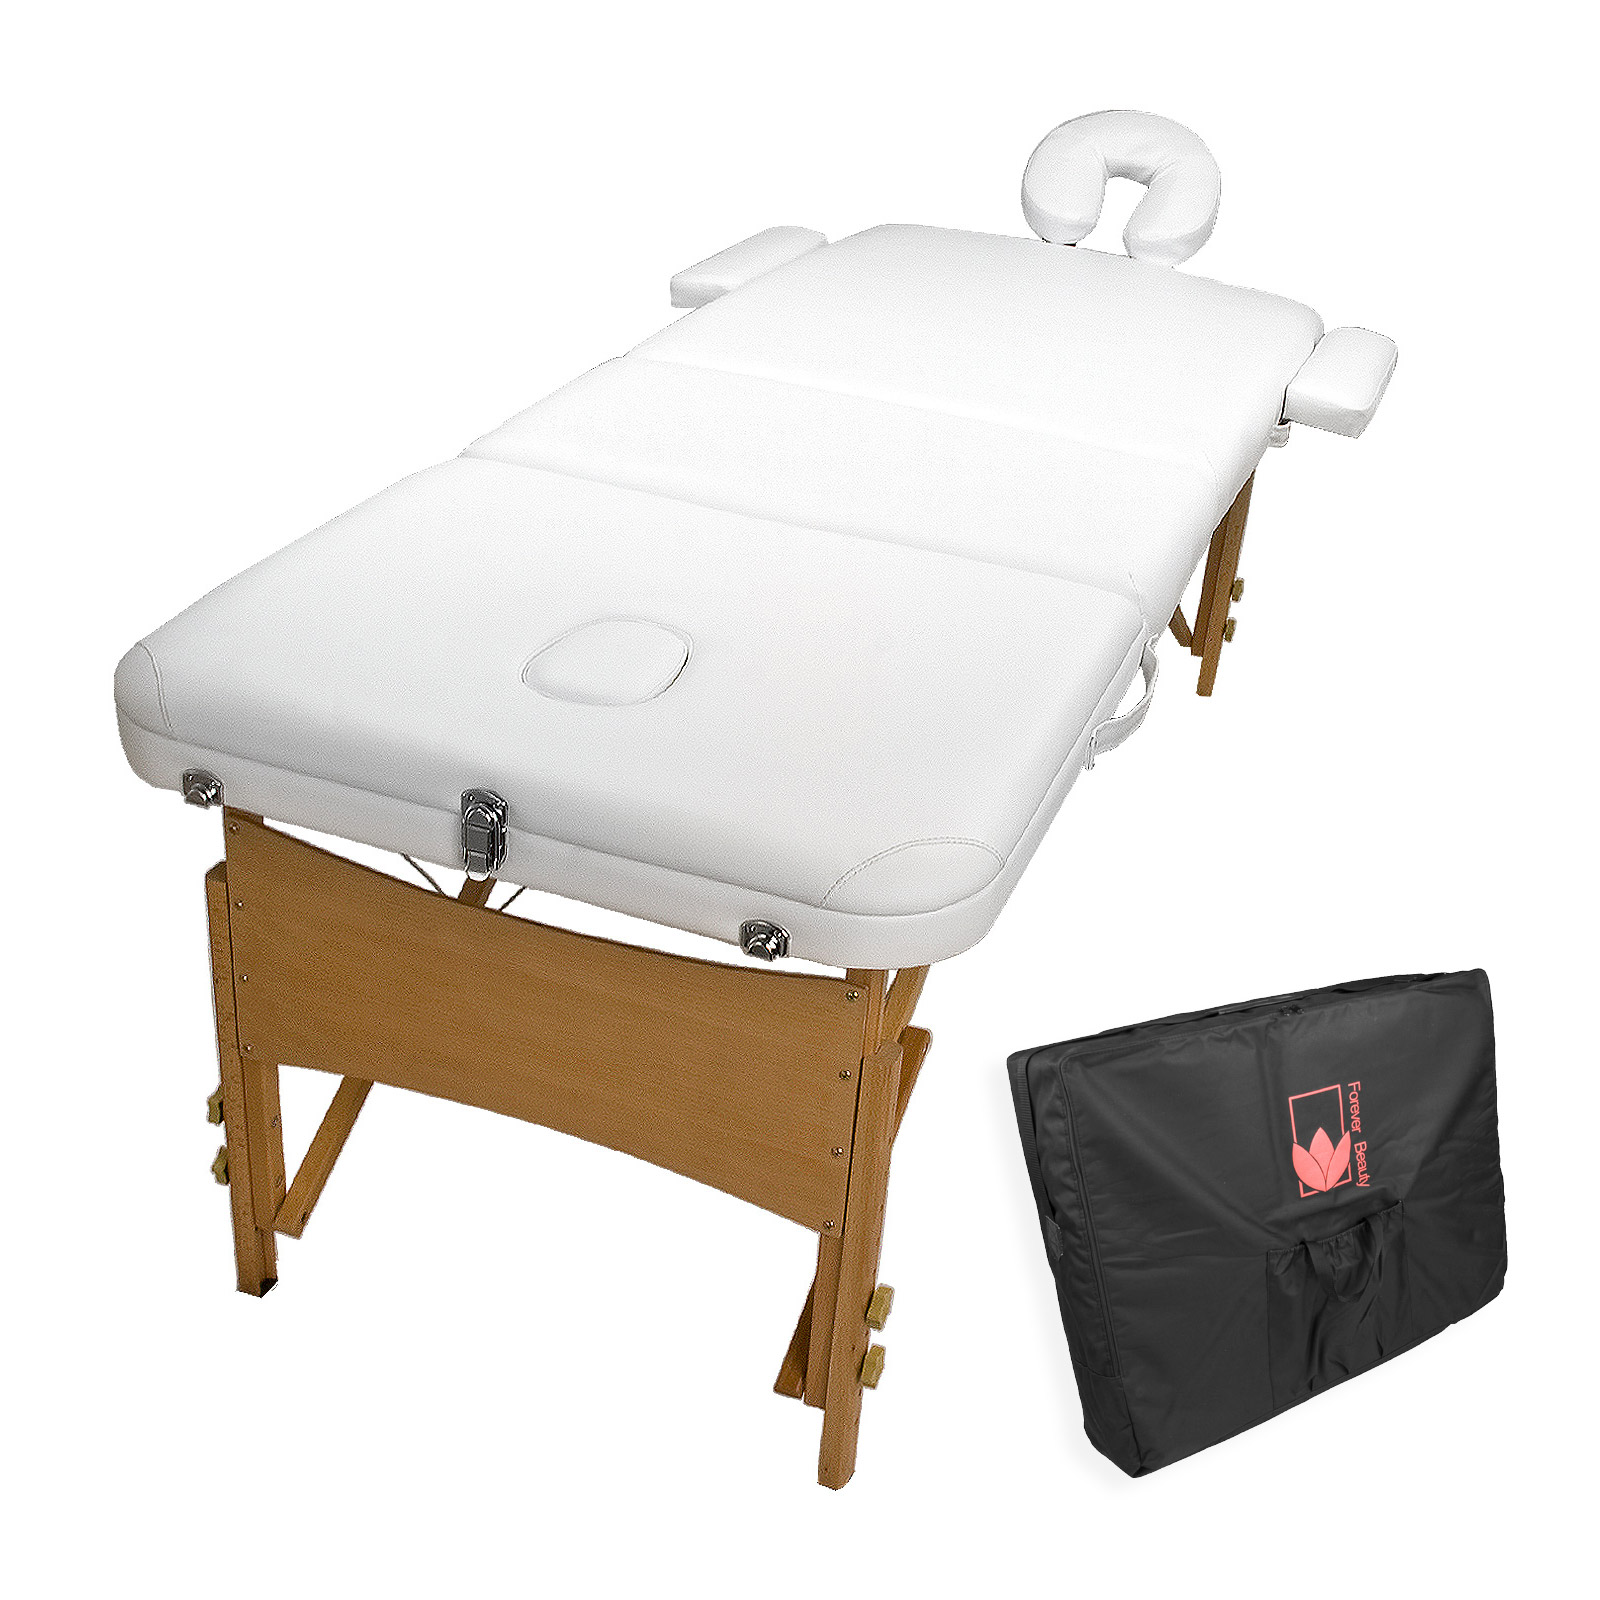 70cm Wooden Portable Massage Table - WHITE